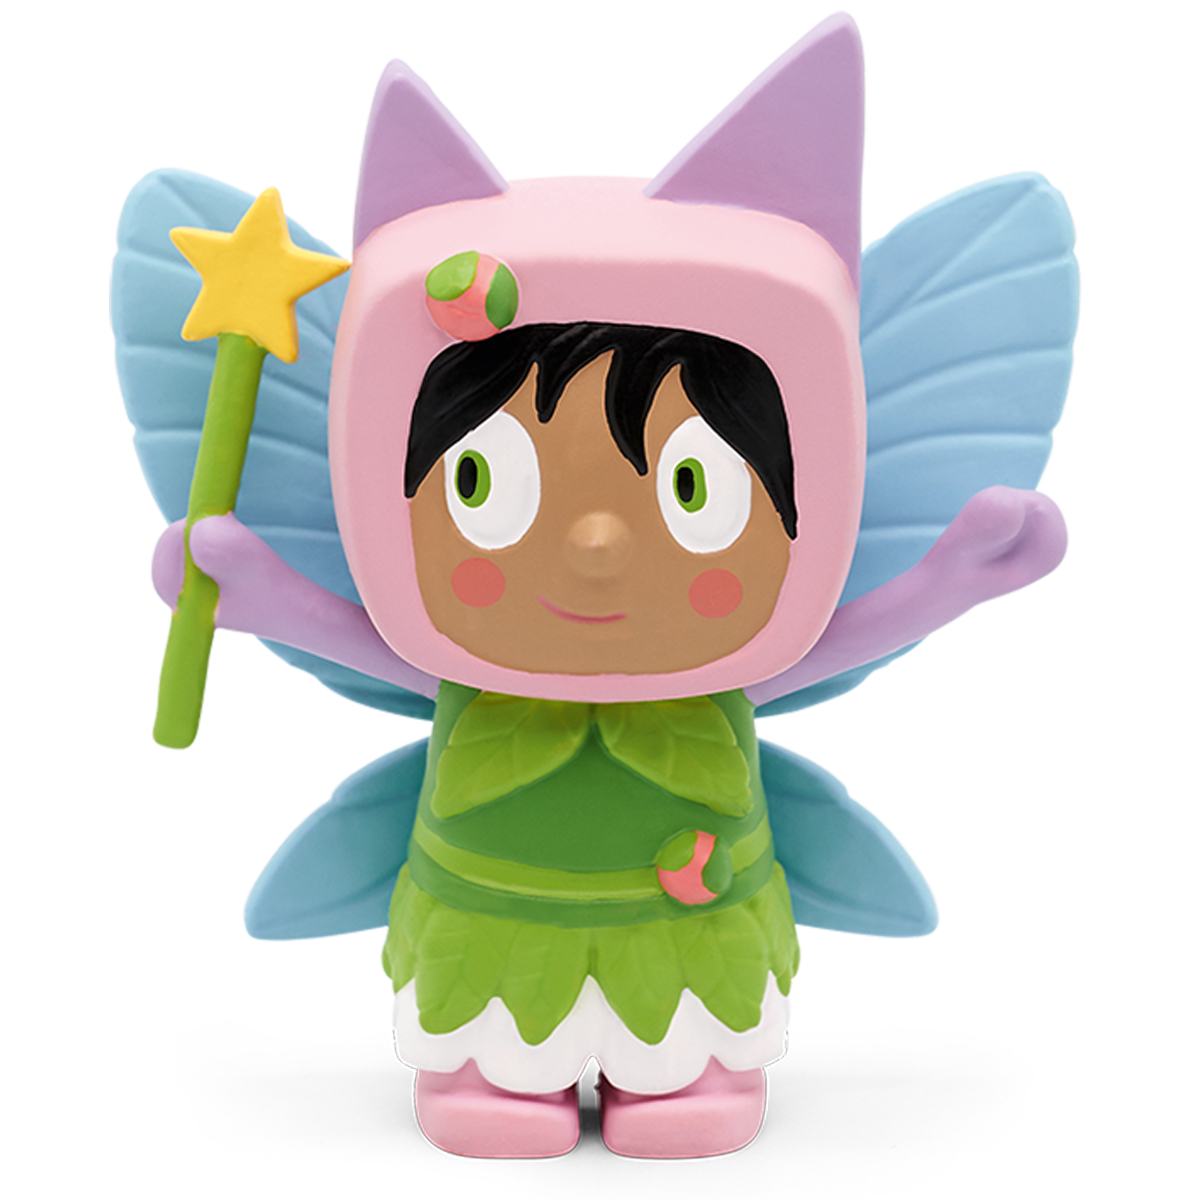 Creative Tonie "Fairy"